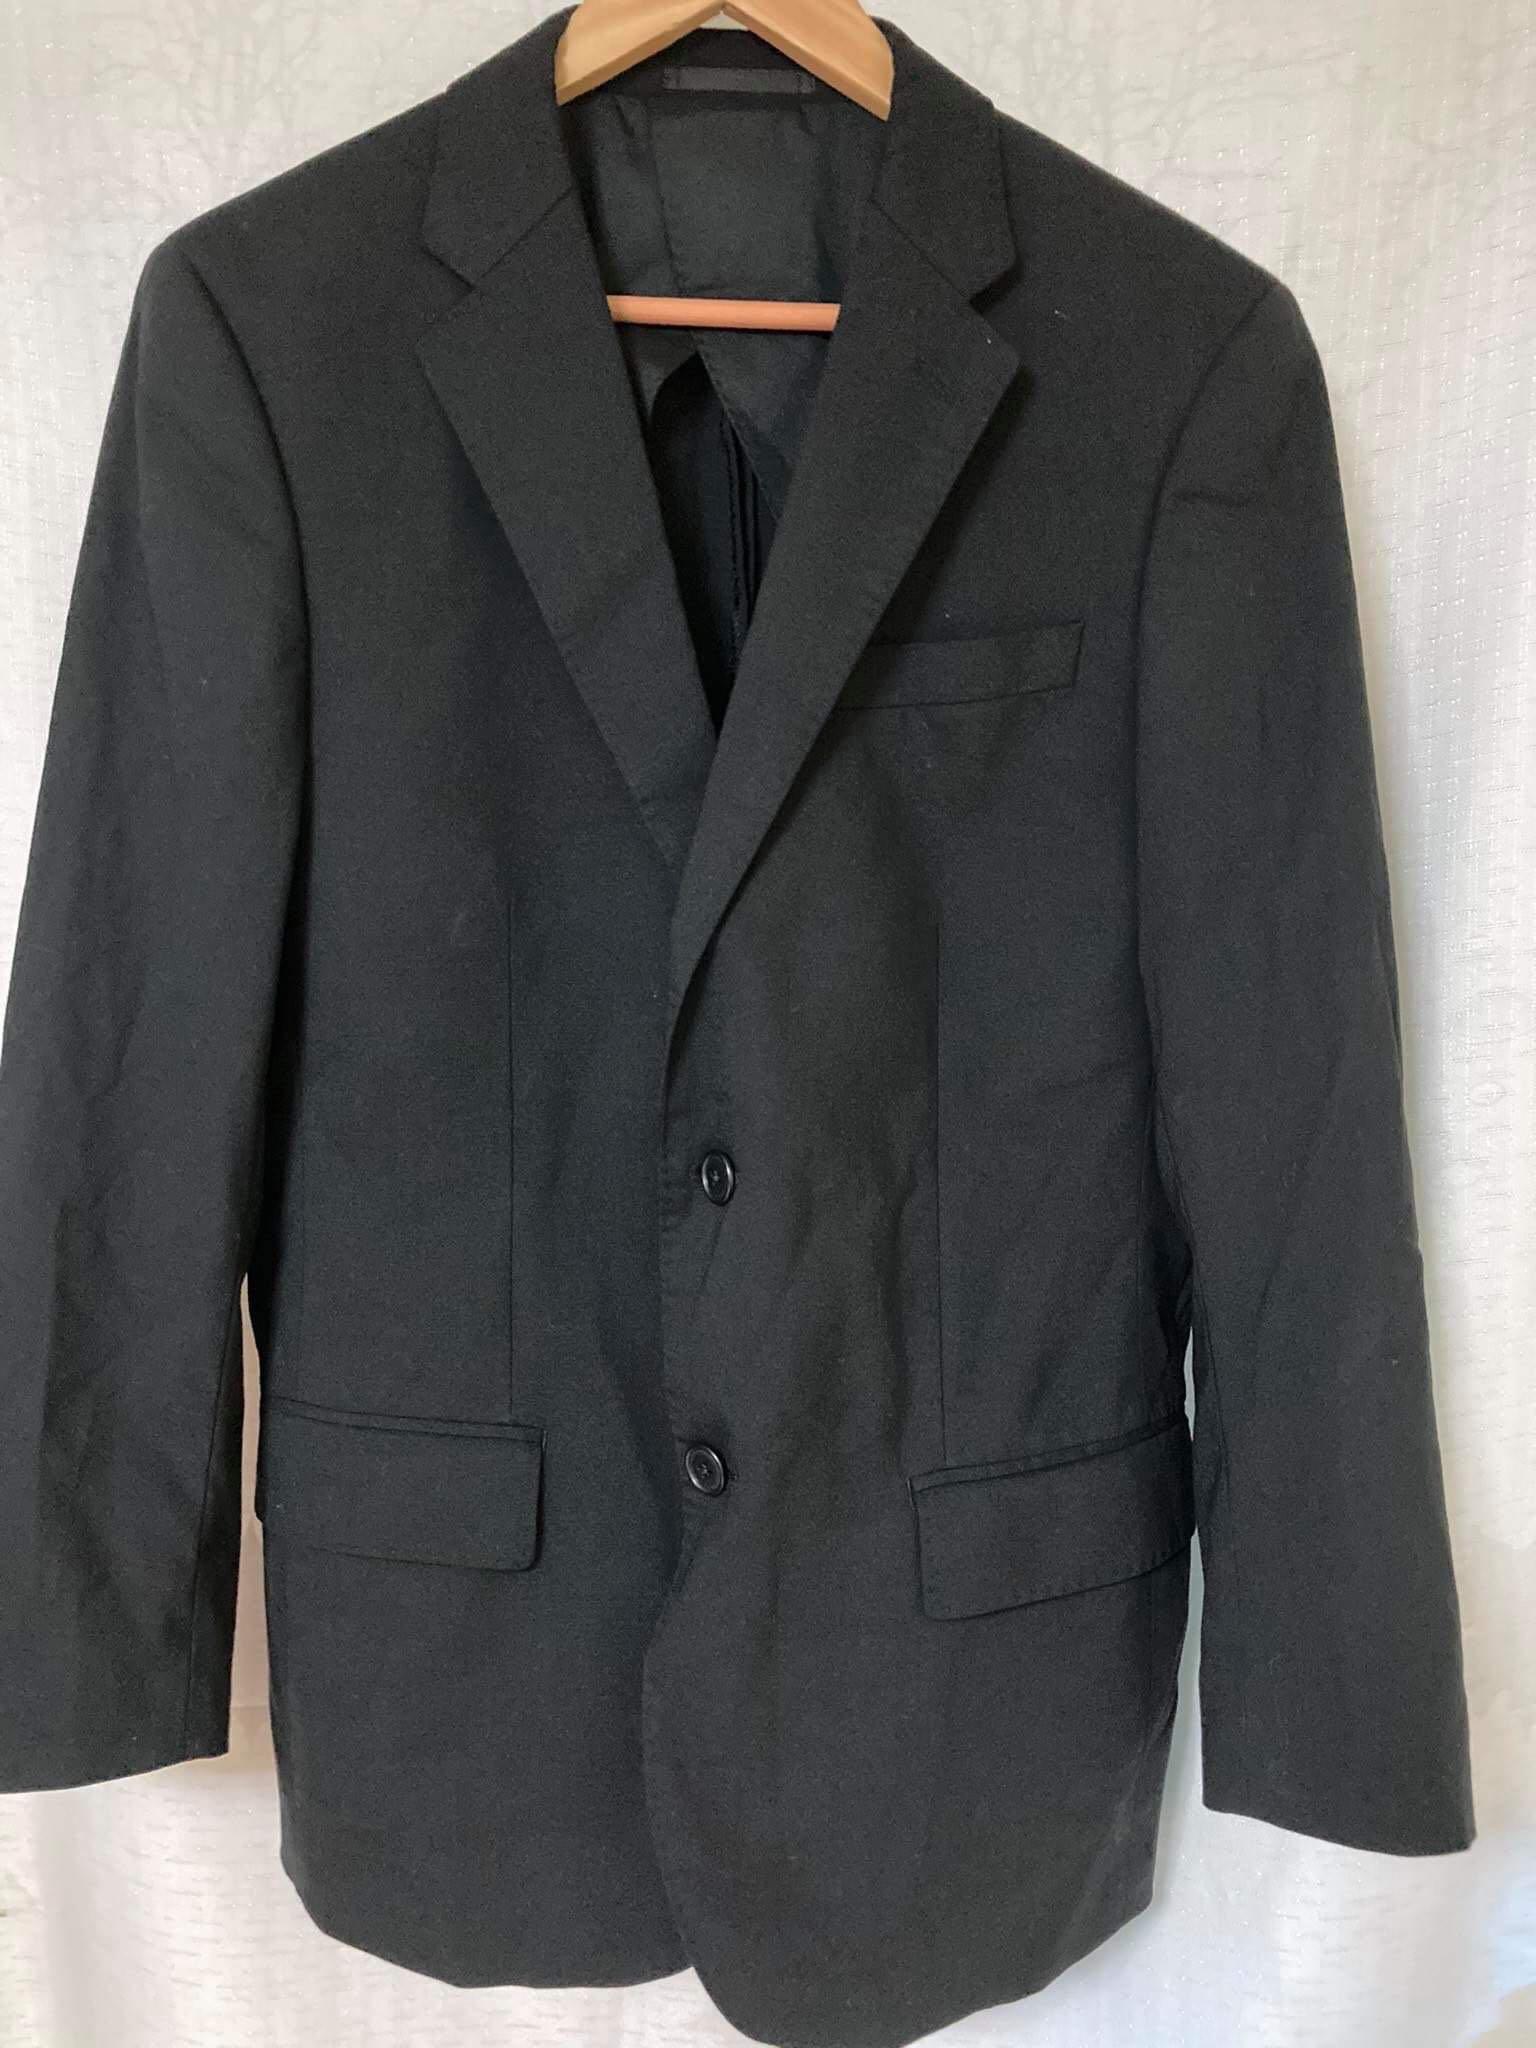 UNIQLO kando jacket blazer M size Navy Mens Fashion Coats Jackets and  Outerwear on Carousell